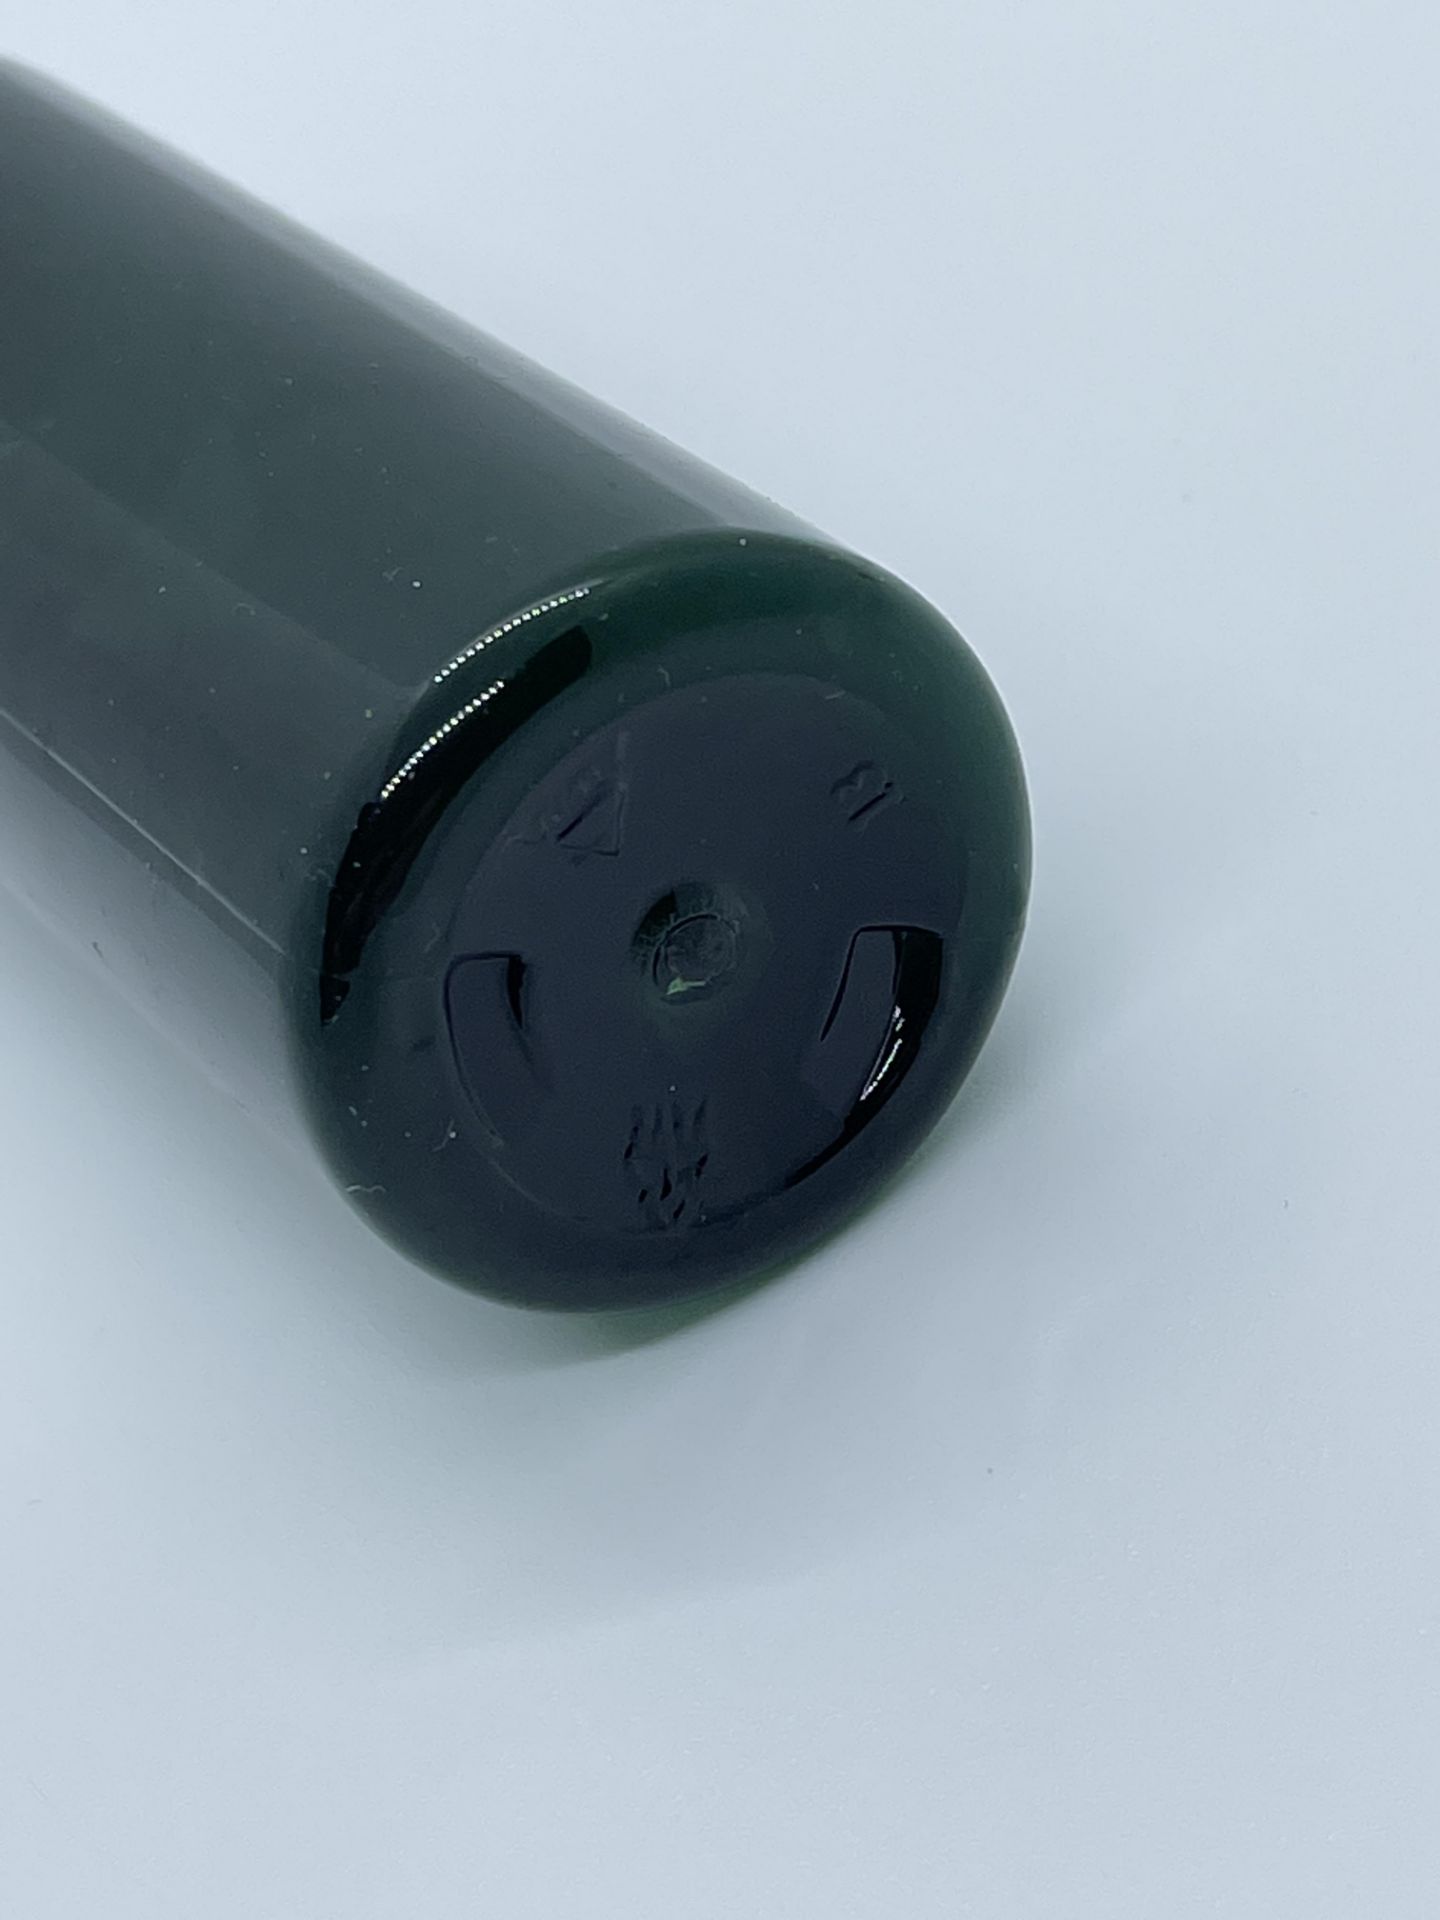 29,000 - Green Alpha Plastic 2 oz Empty Bottles, 20-410 Threading Neck, 4 1/8" Tall, 1.25" Diameter - Image 4 of 4